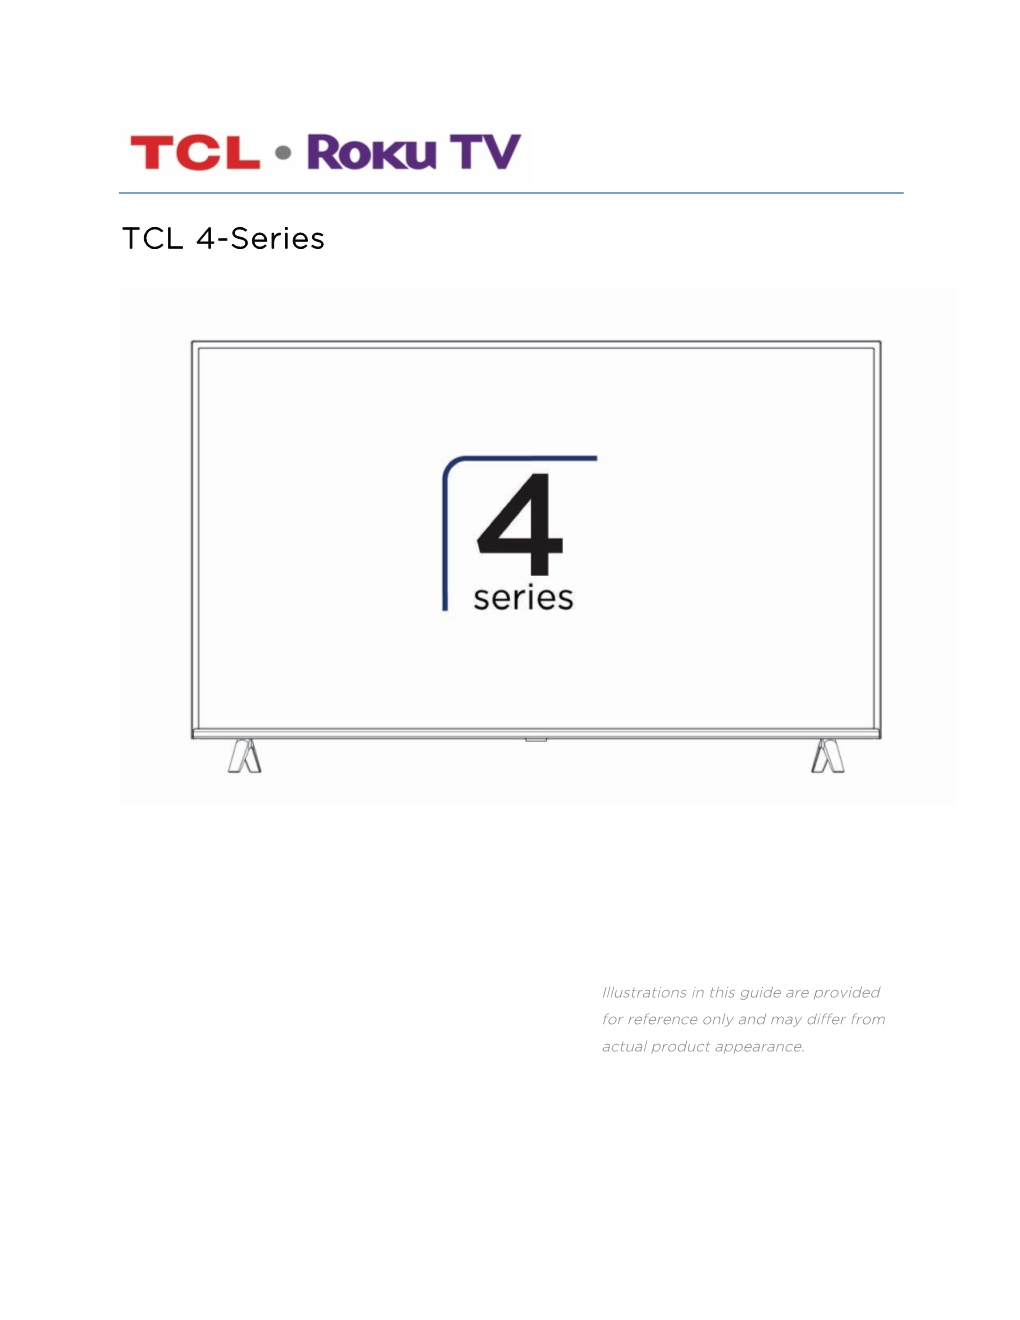 TCL 4-Series